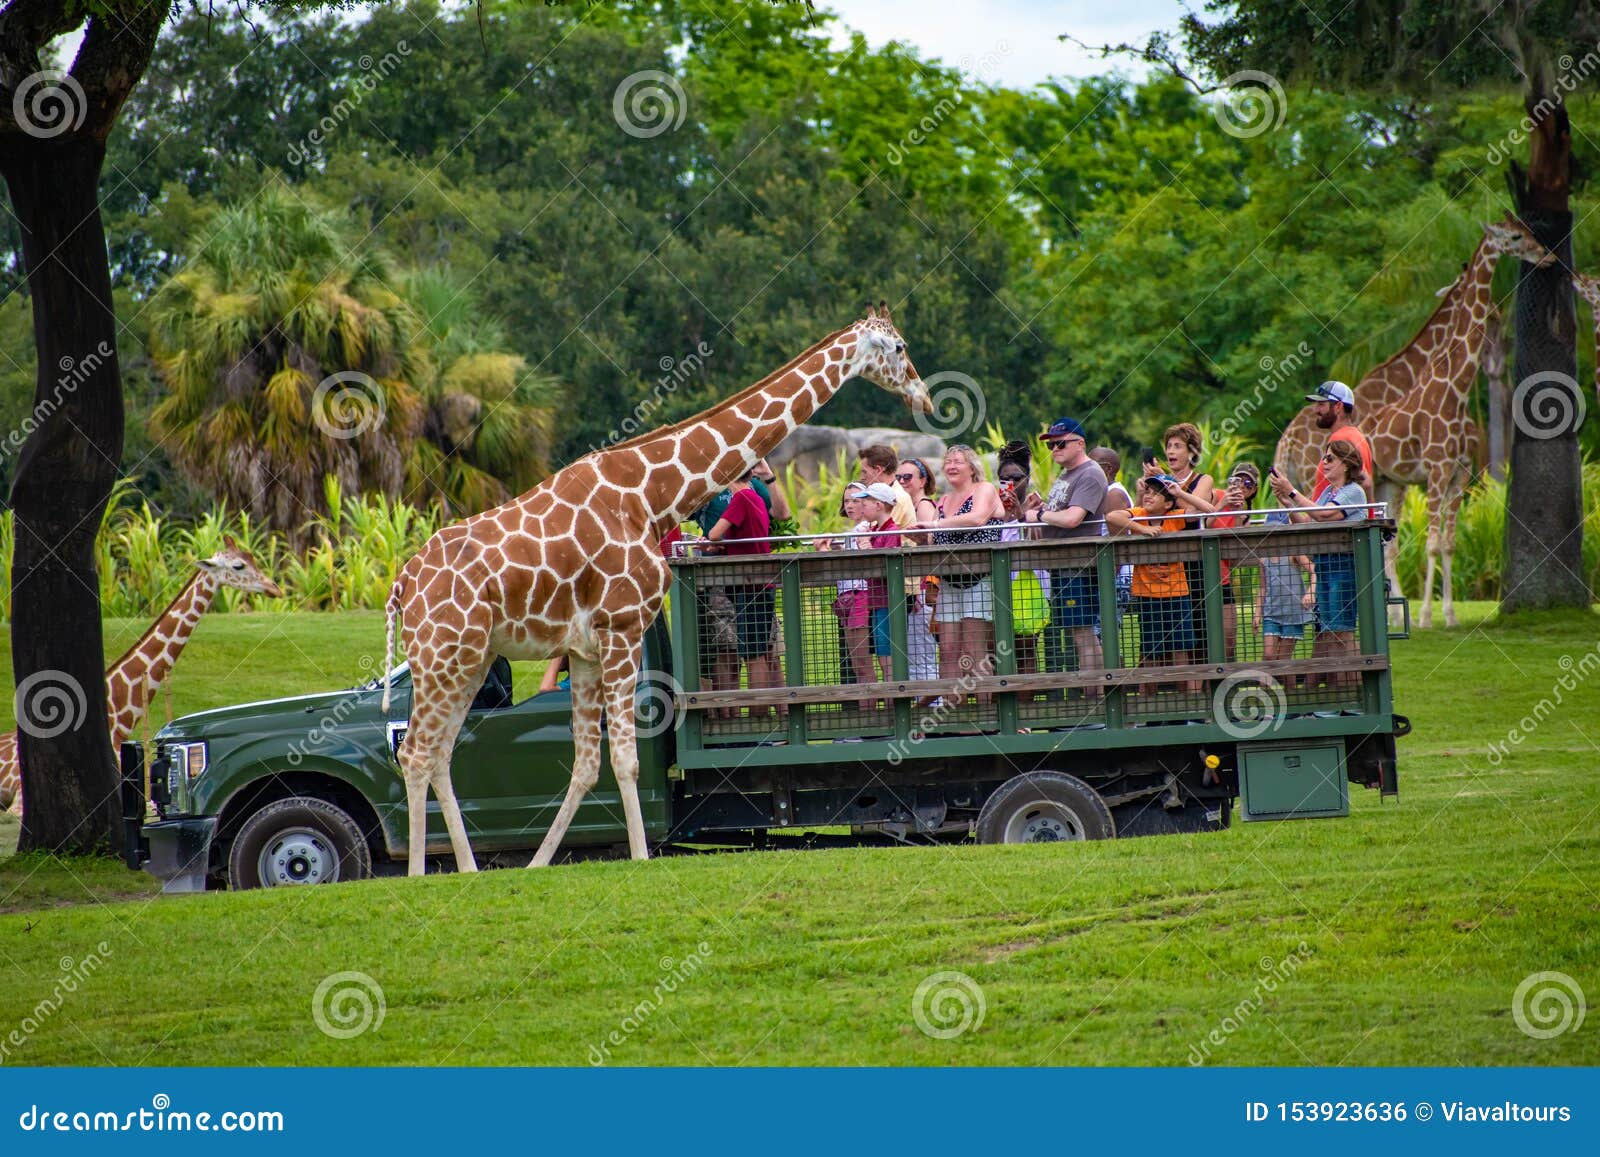 Giraffe Waiting Lettuce Leaves From People Enjoying Safari At